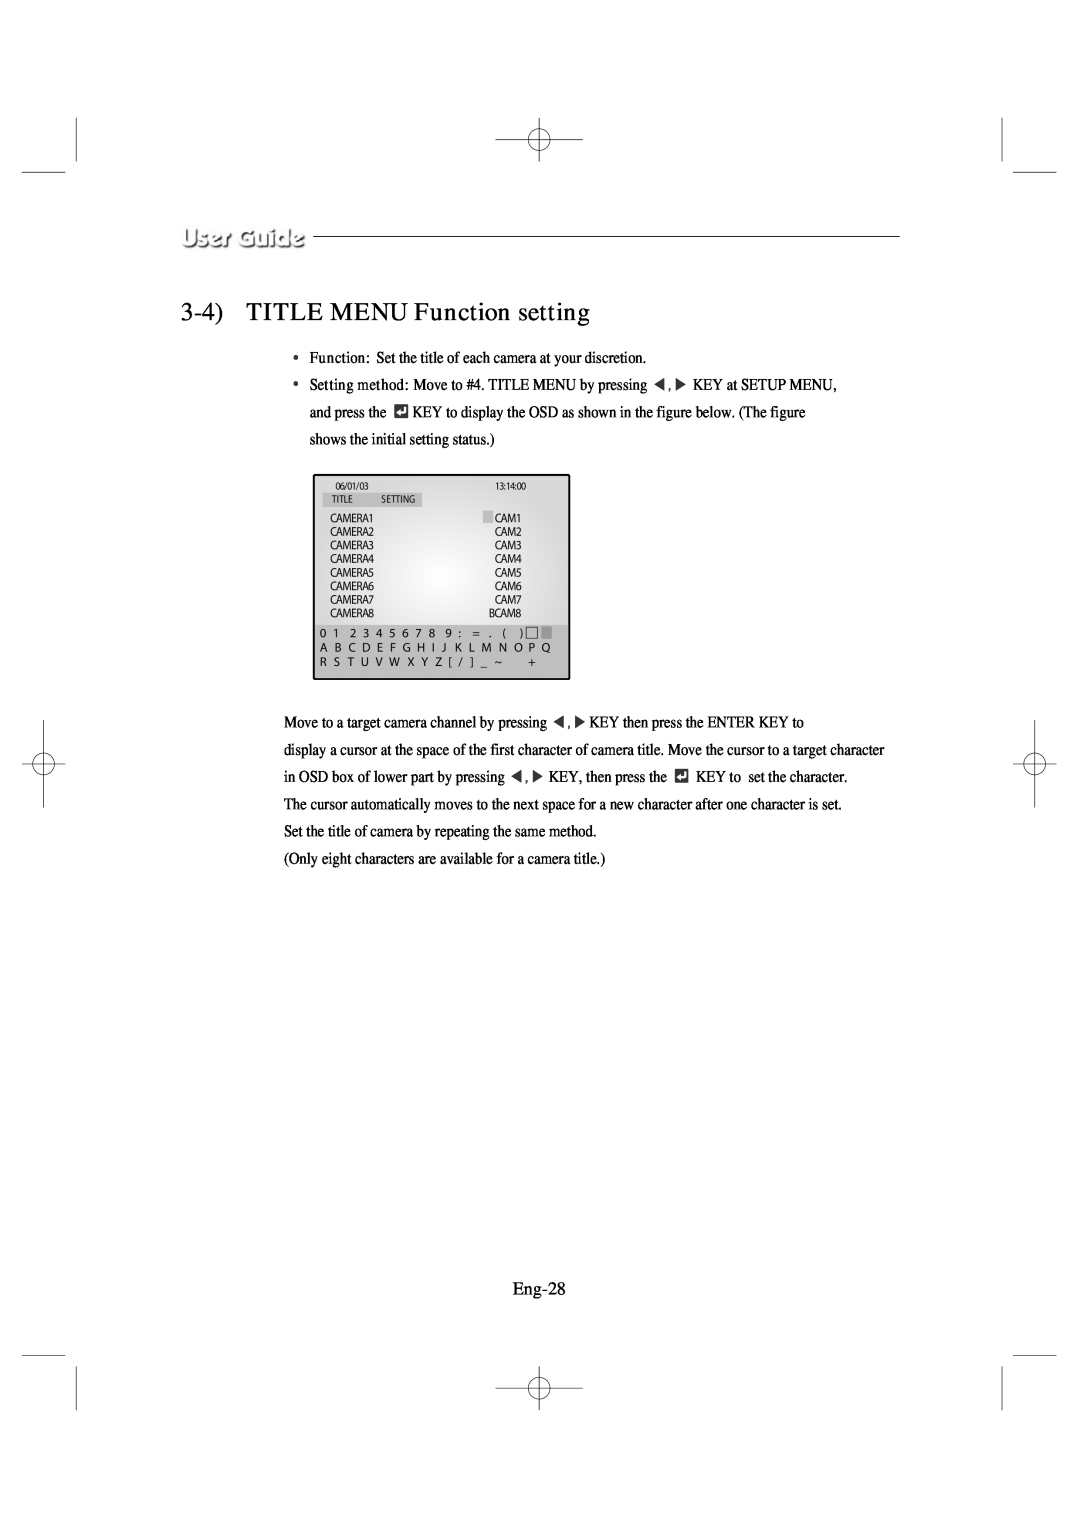 Samsung SSC17WEB manual 3-4TITLE MENU Function setting, Eng-28 